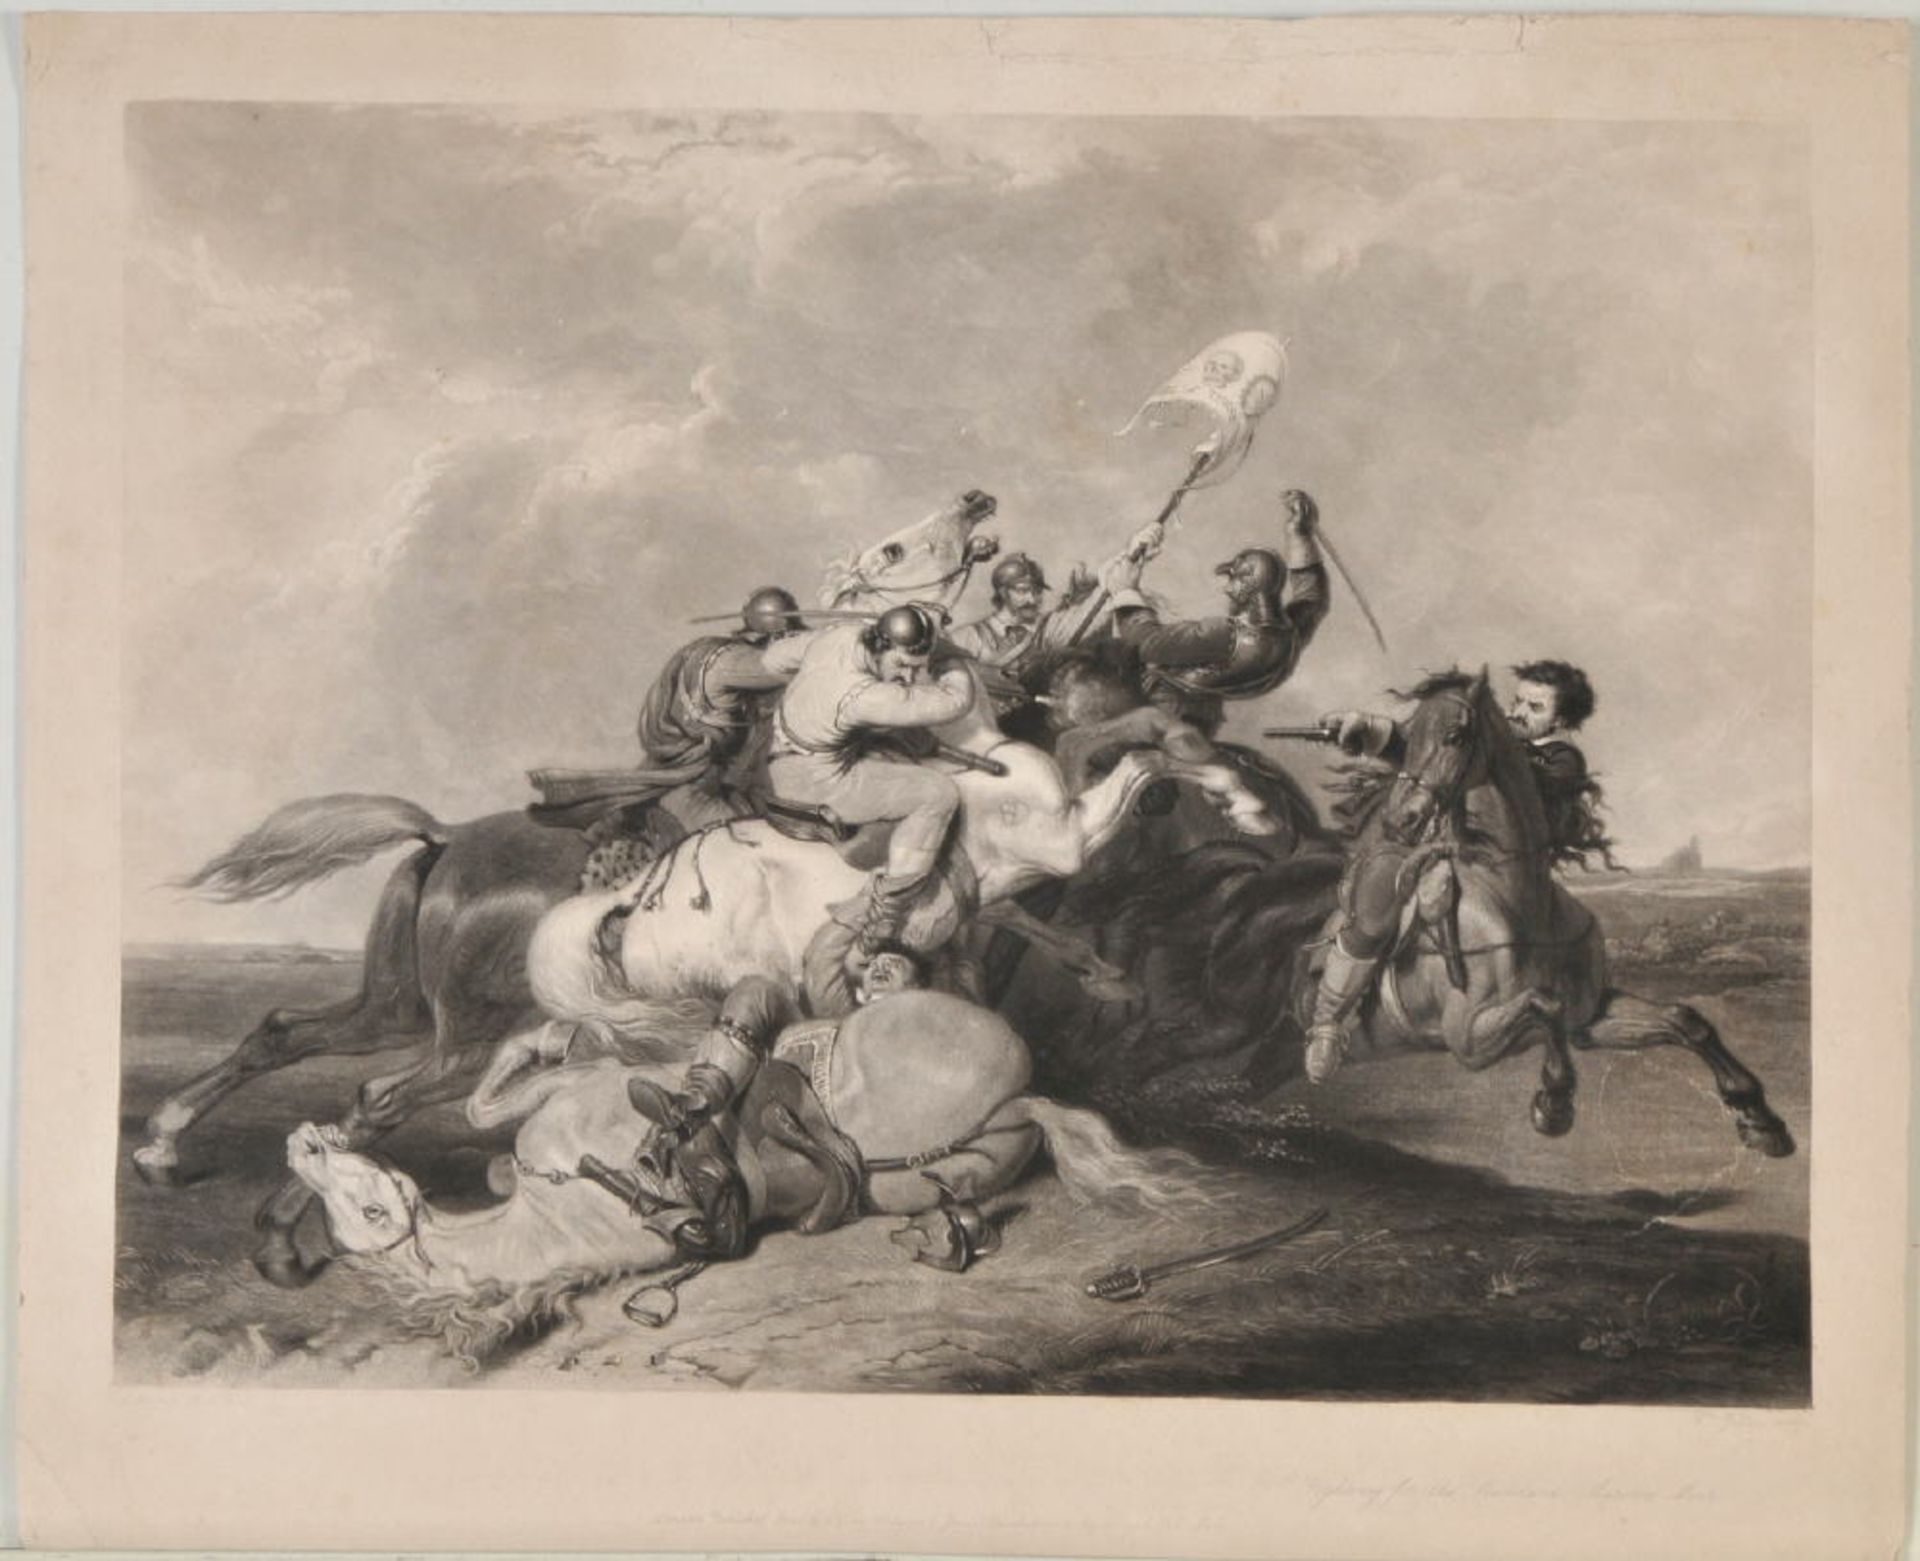 Giller, William, 1805 London - nach 1868Radierung, 33 x 43 cm, betit. " Fighting for the Standard,